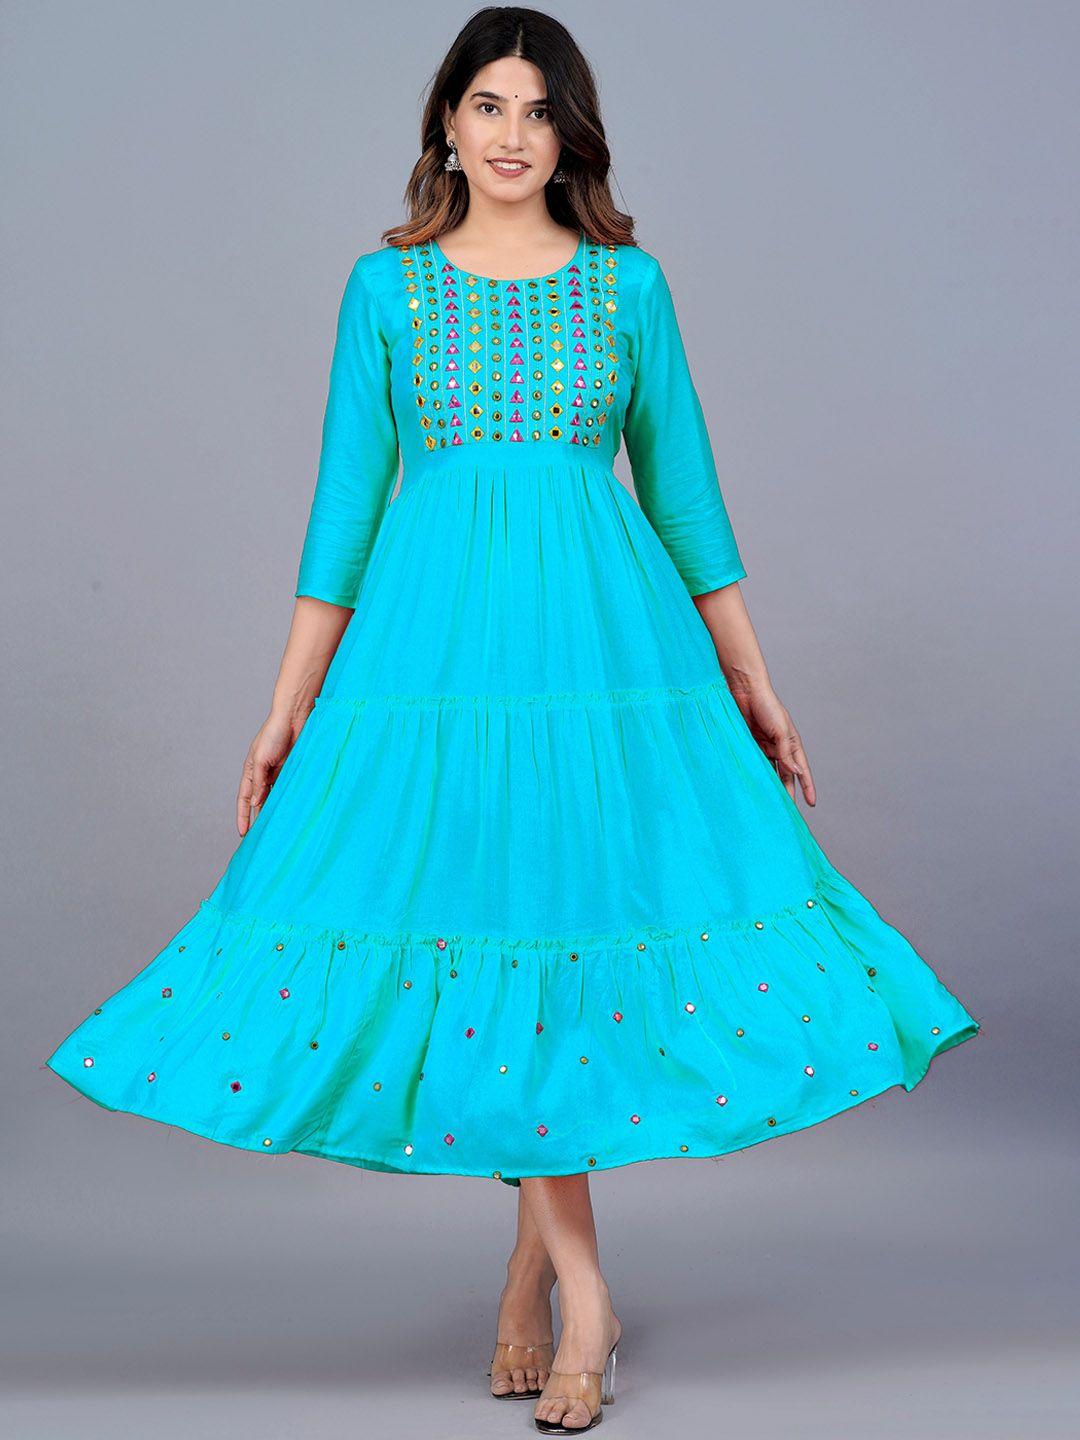 kalini turquoise blue & purple embellished embroidered ethnic midi dress